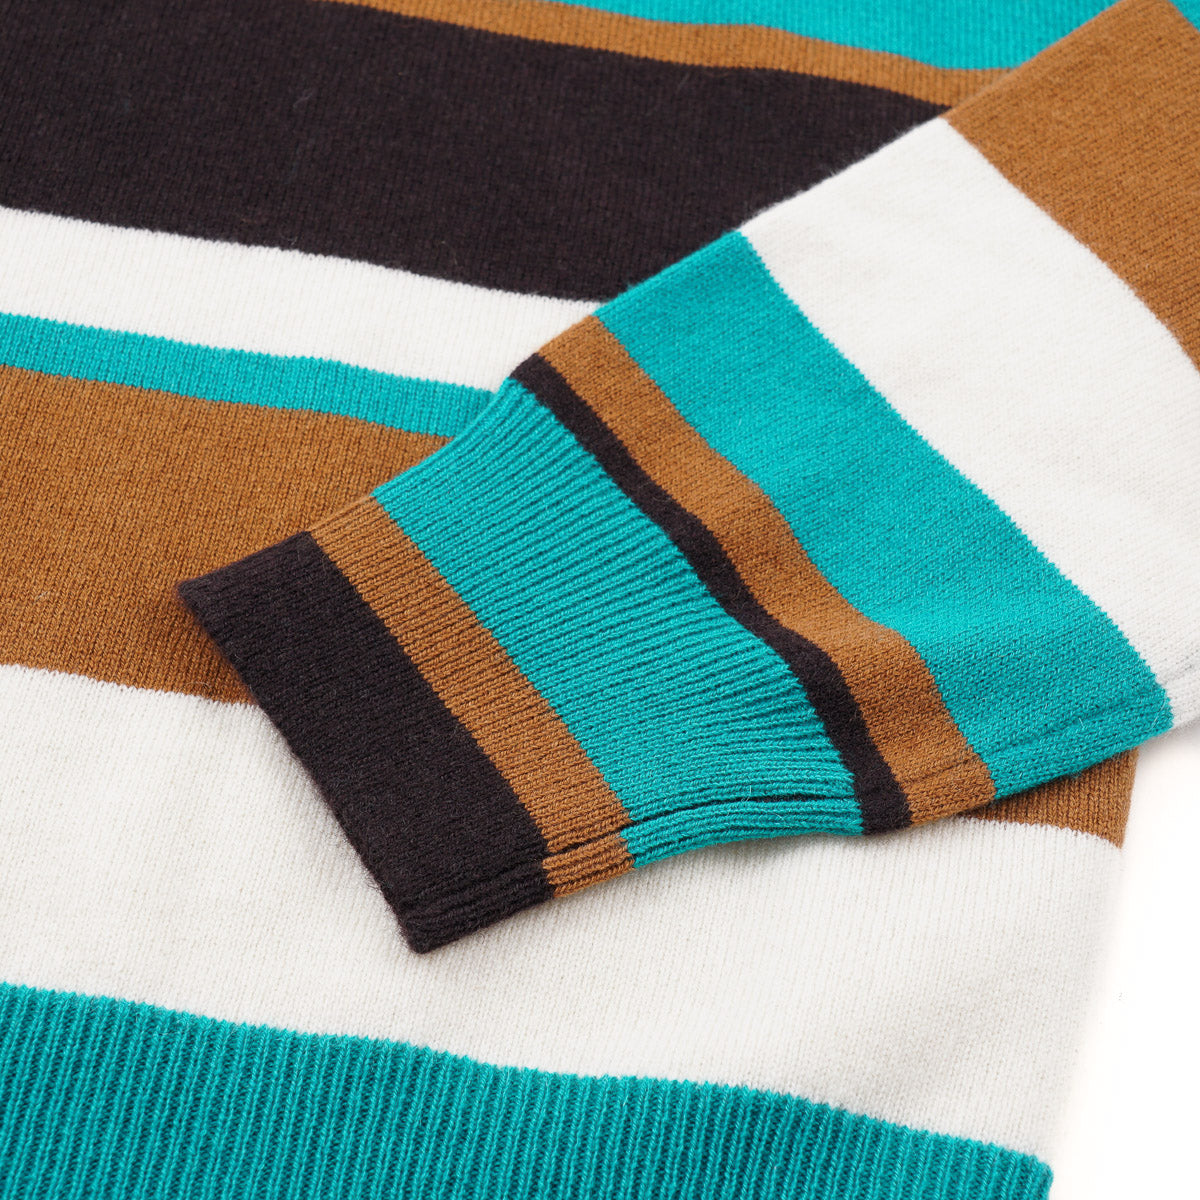 Drumohr Multi-Striped Cashmere Sweater - Top Shelf Apparel